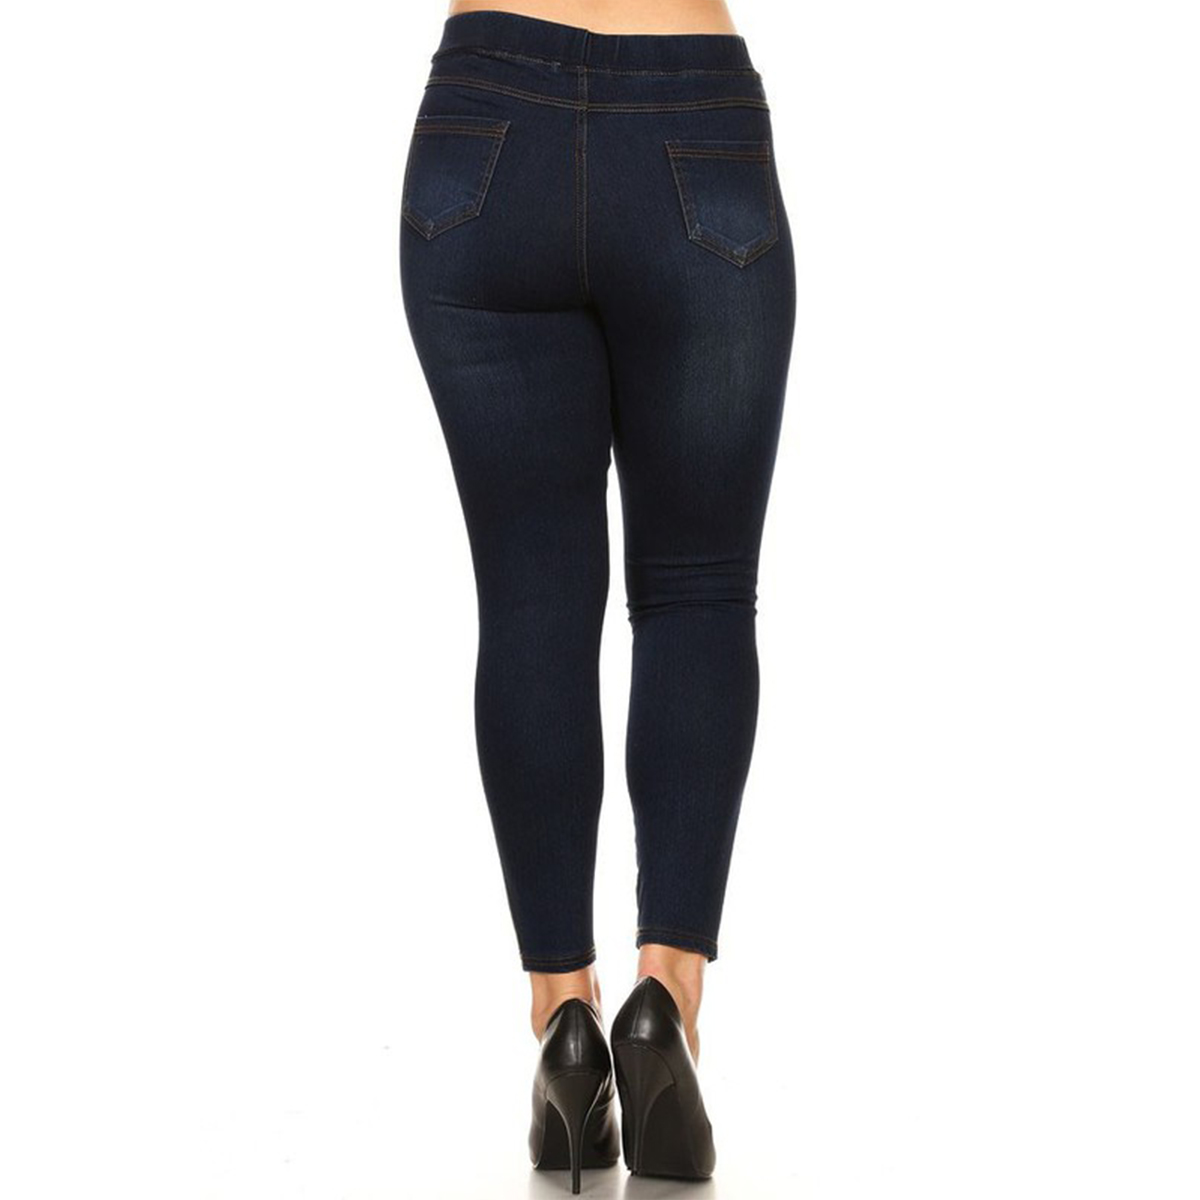 LAVRA Women's True Plus Size Jegging High Waist Jeans Full Length Denim Leggings with Pockets - image 3 of 4